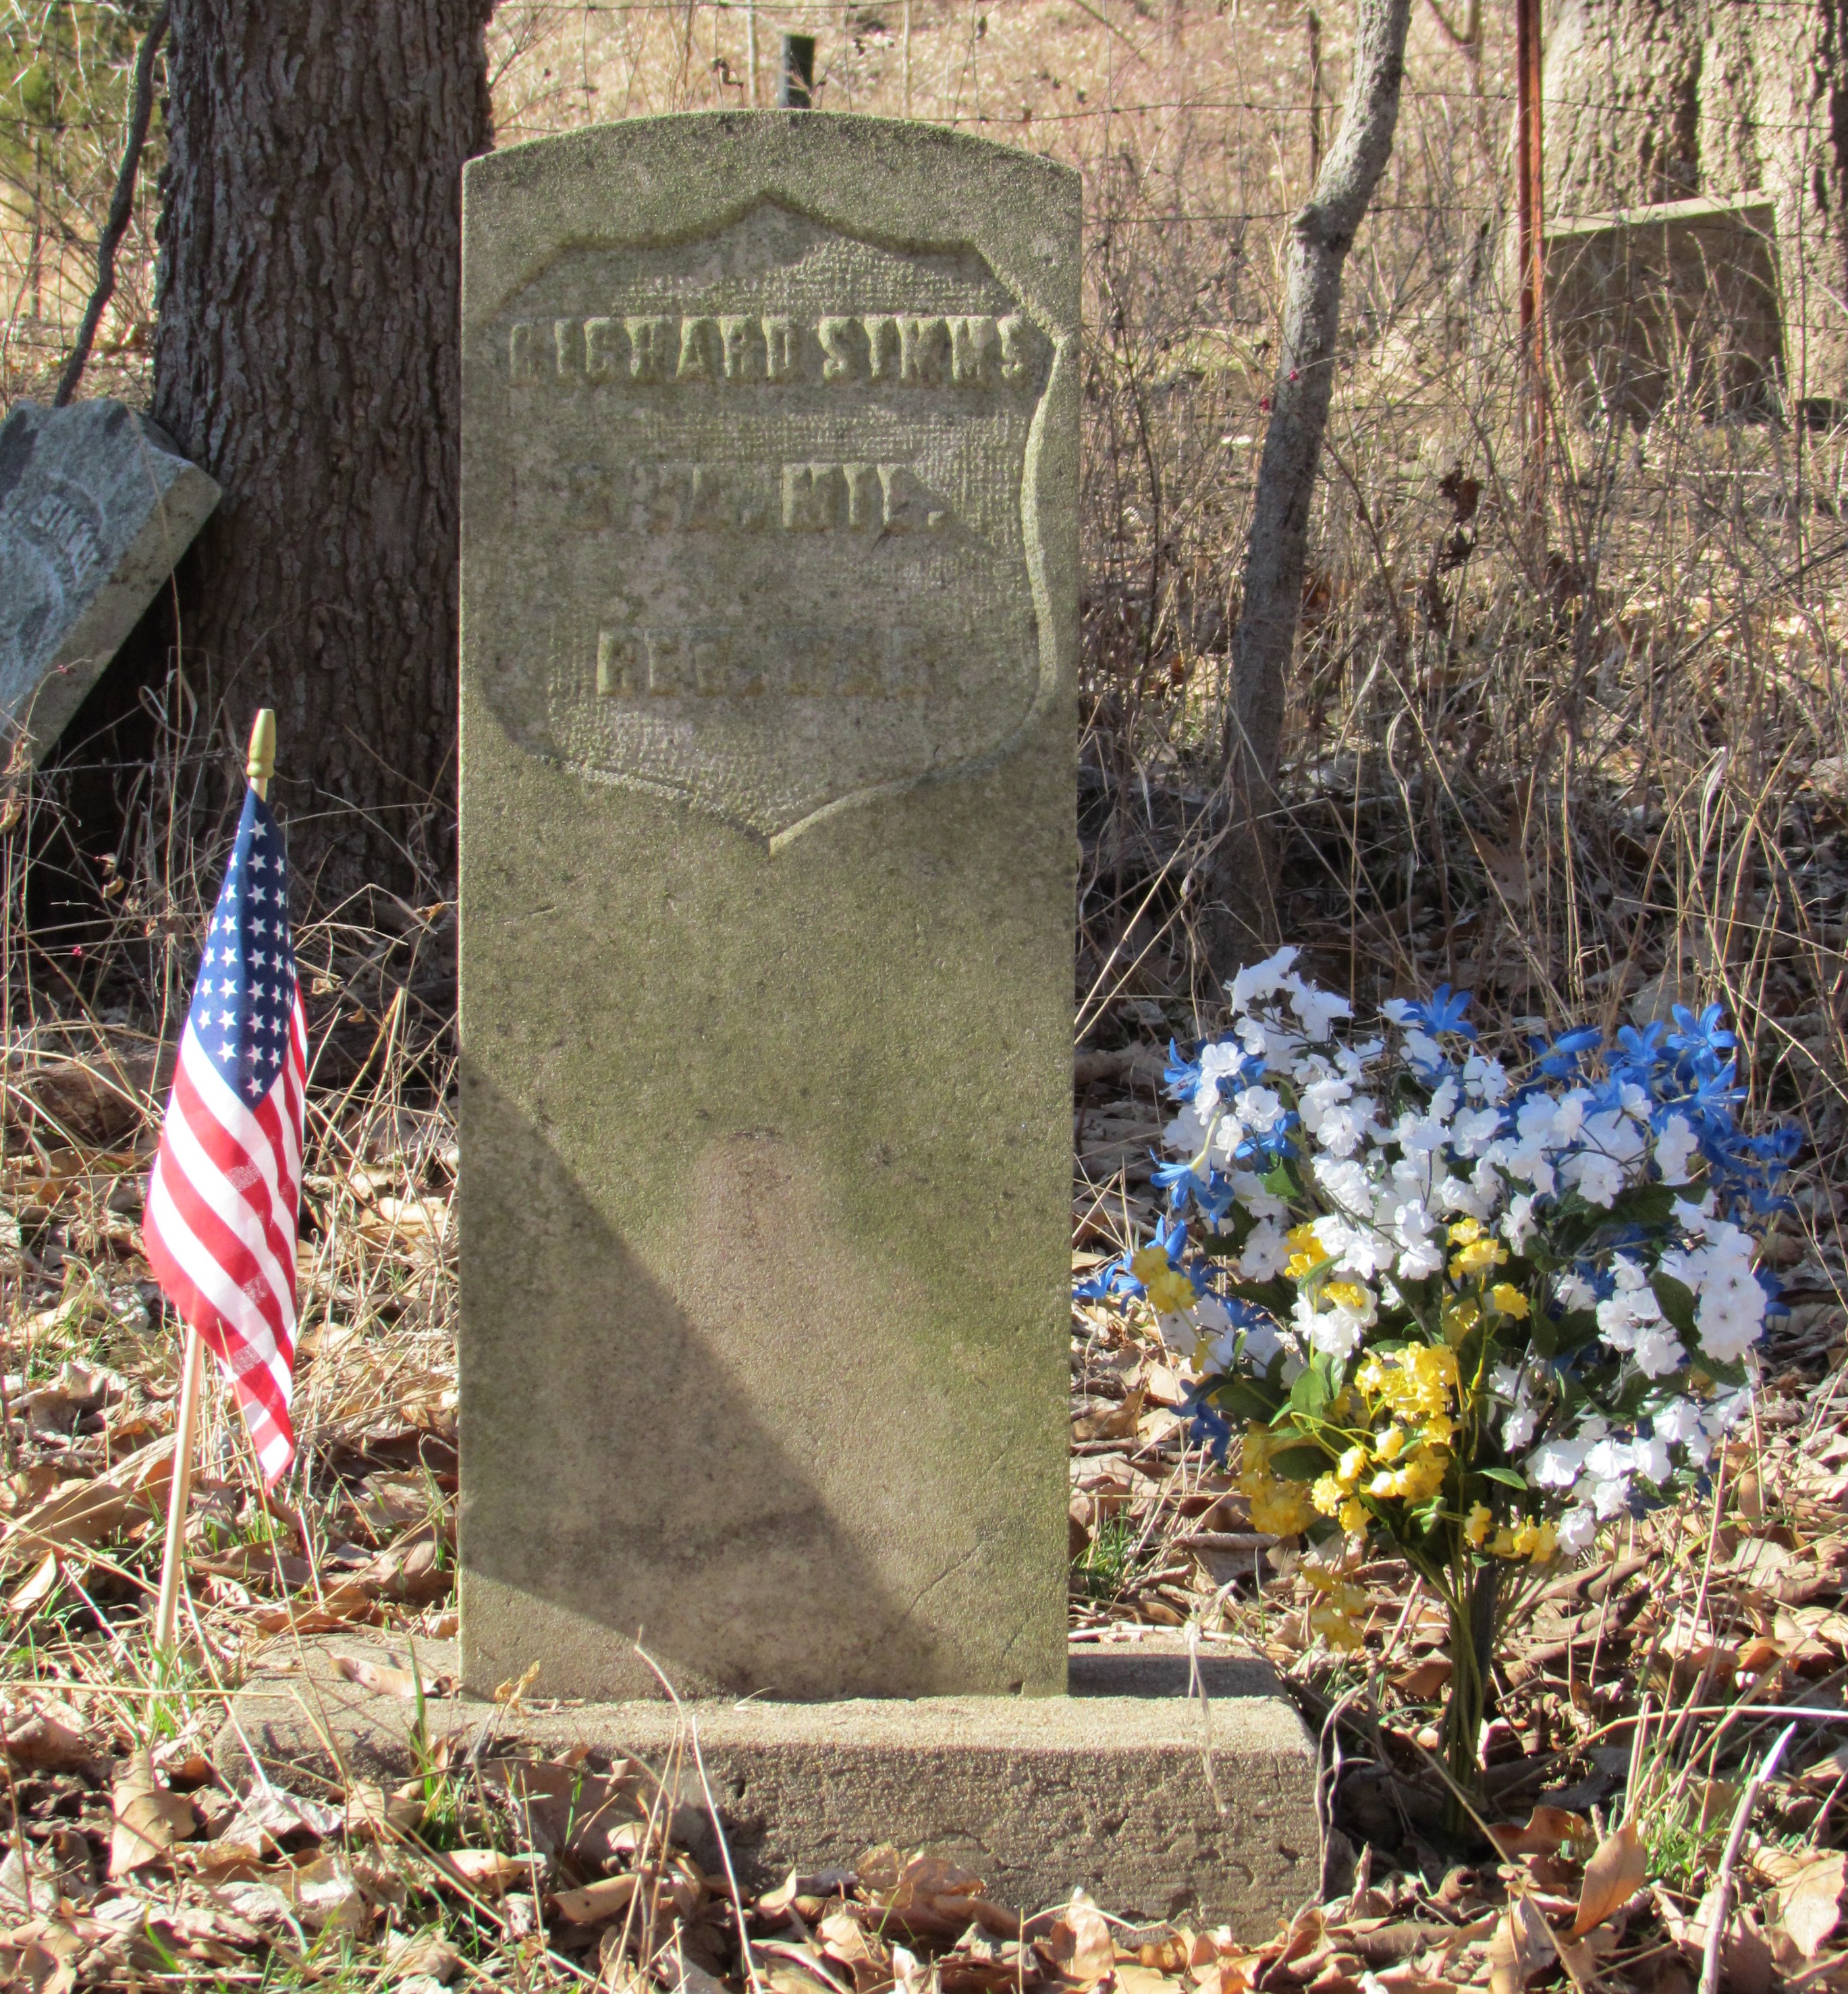 Richard Simms Grave Marker 